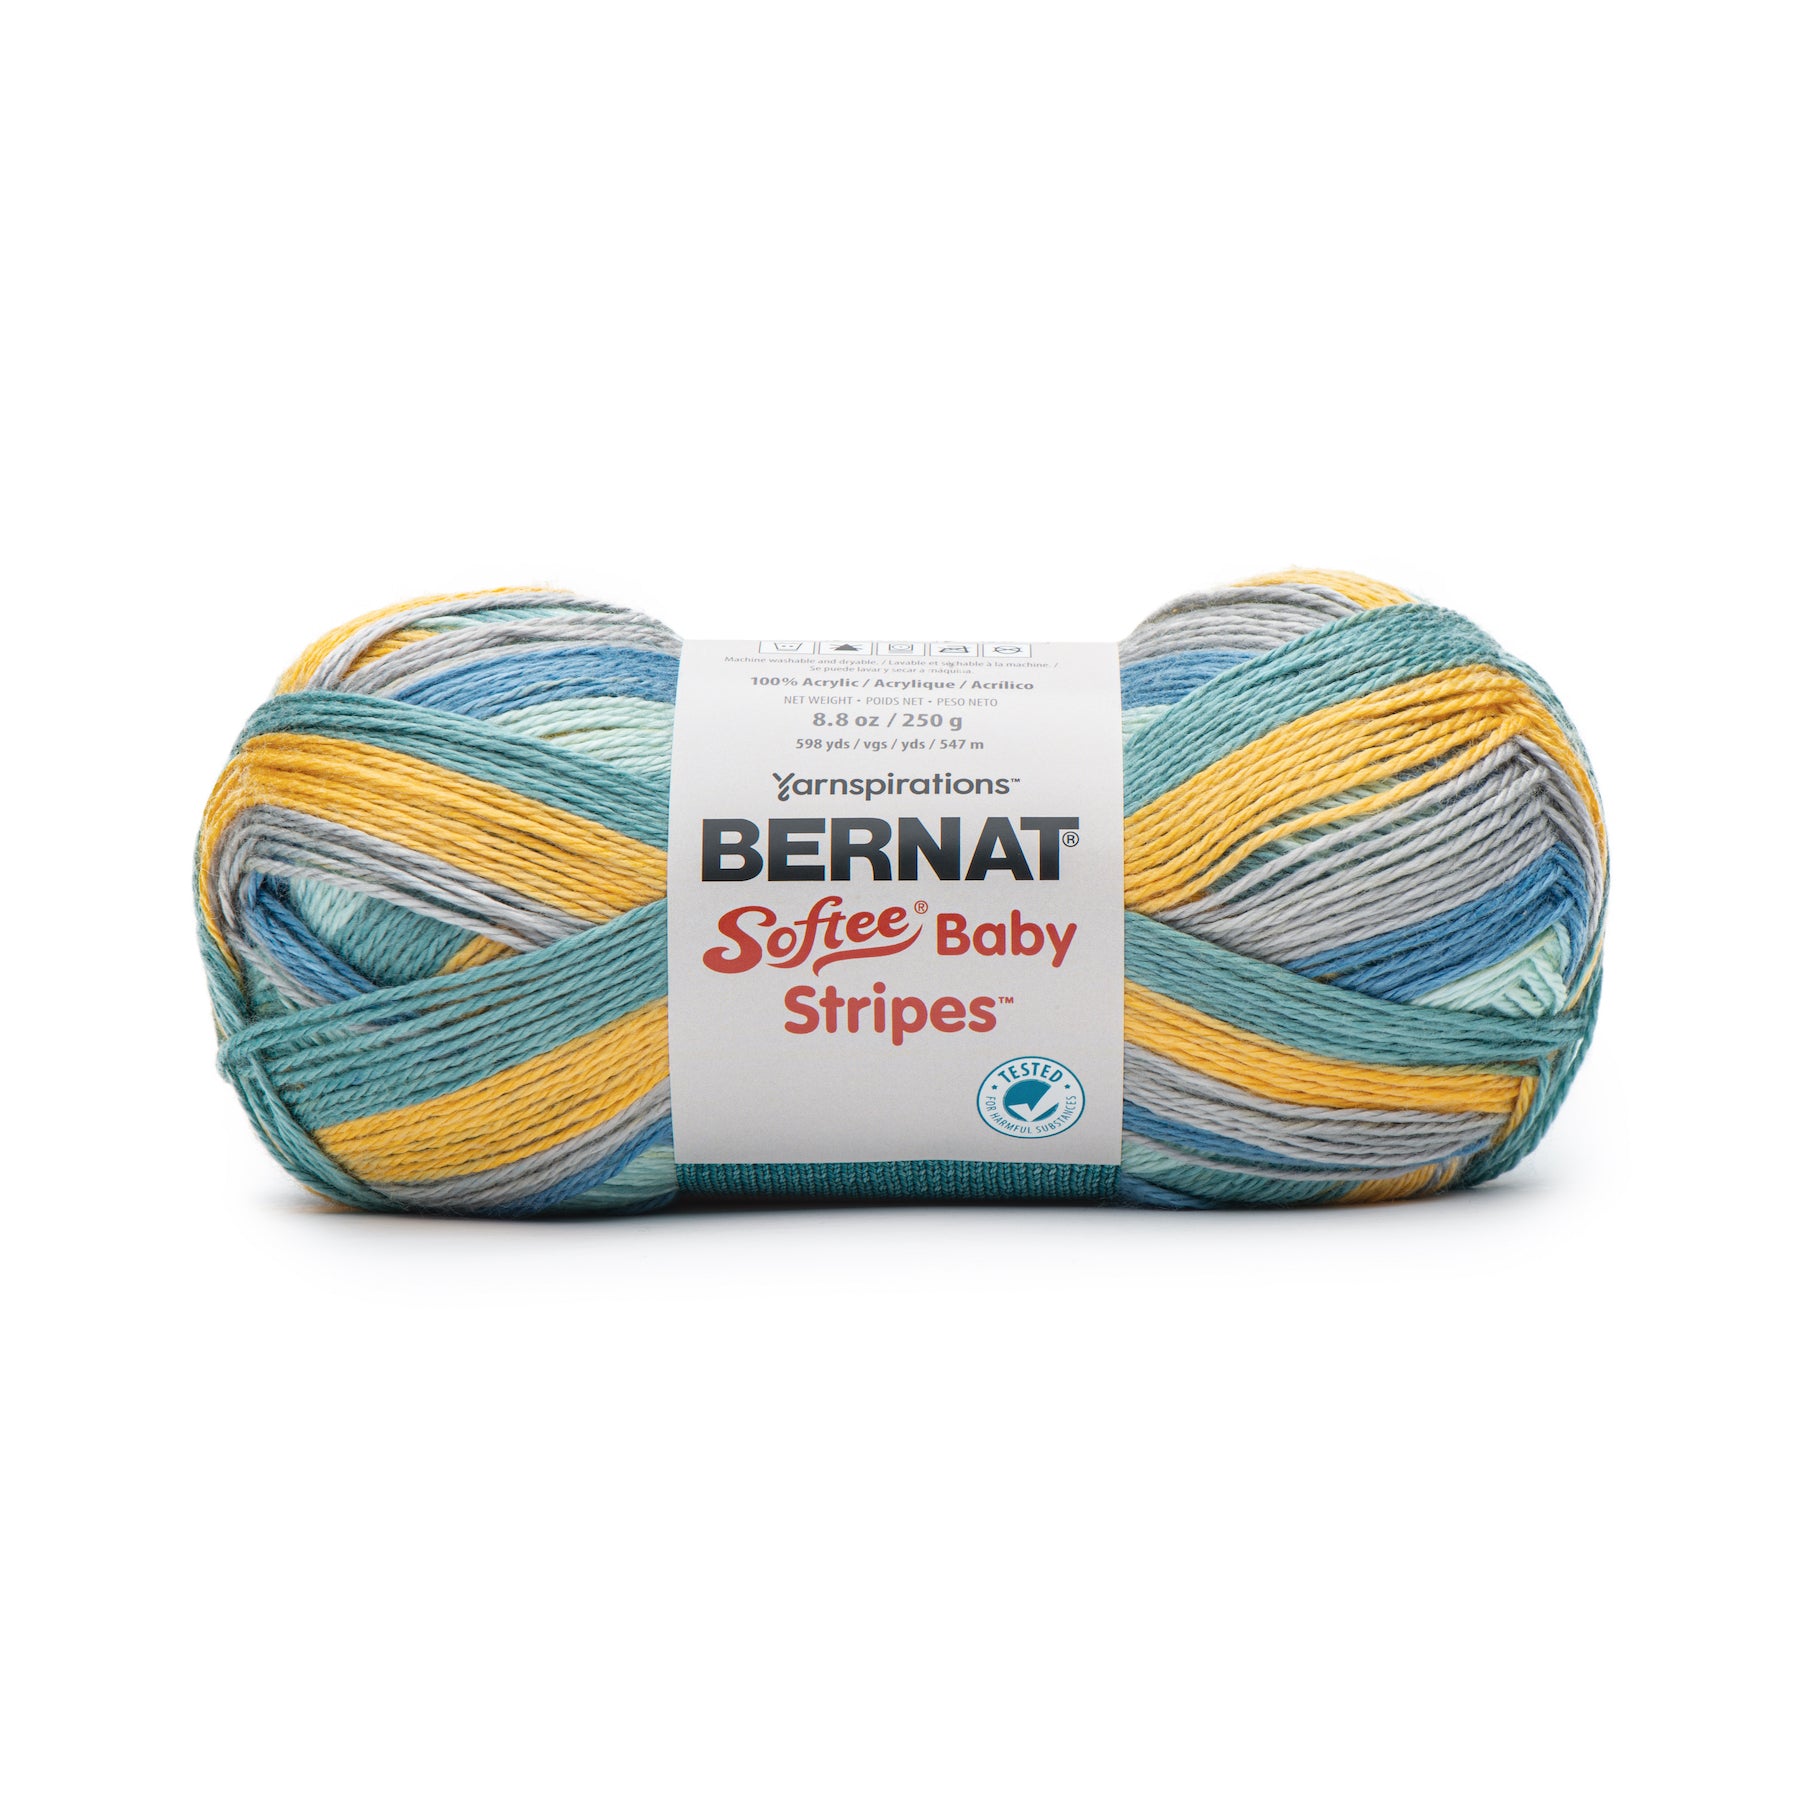 Bernat Softee Baby Stripes Yarn (250g/8.8oz) - Discontinued Shades